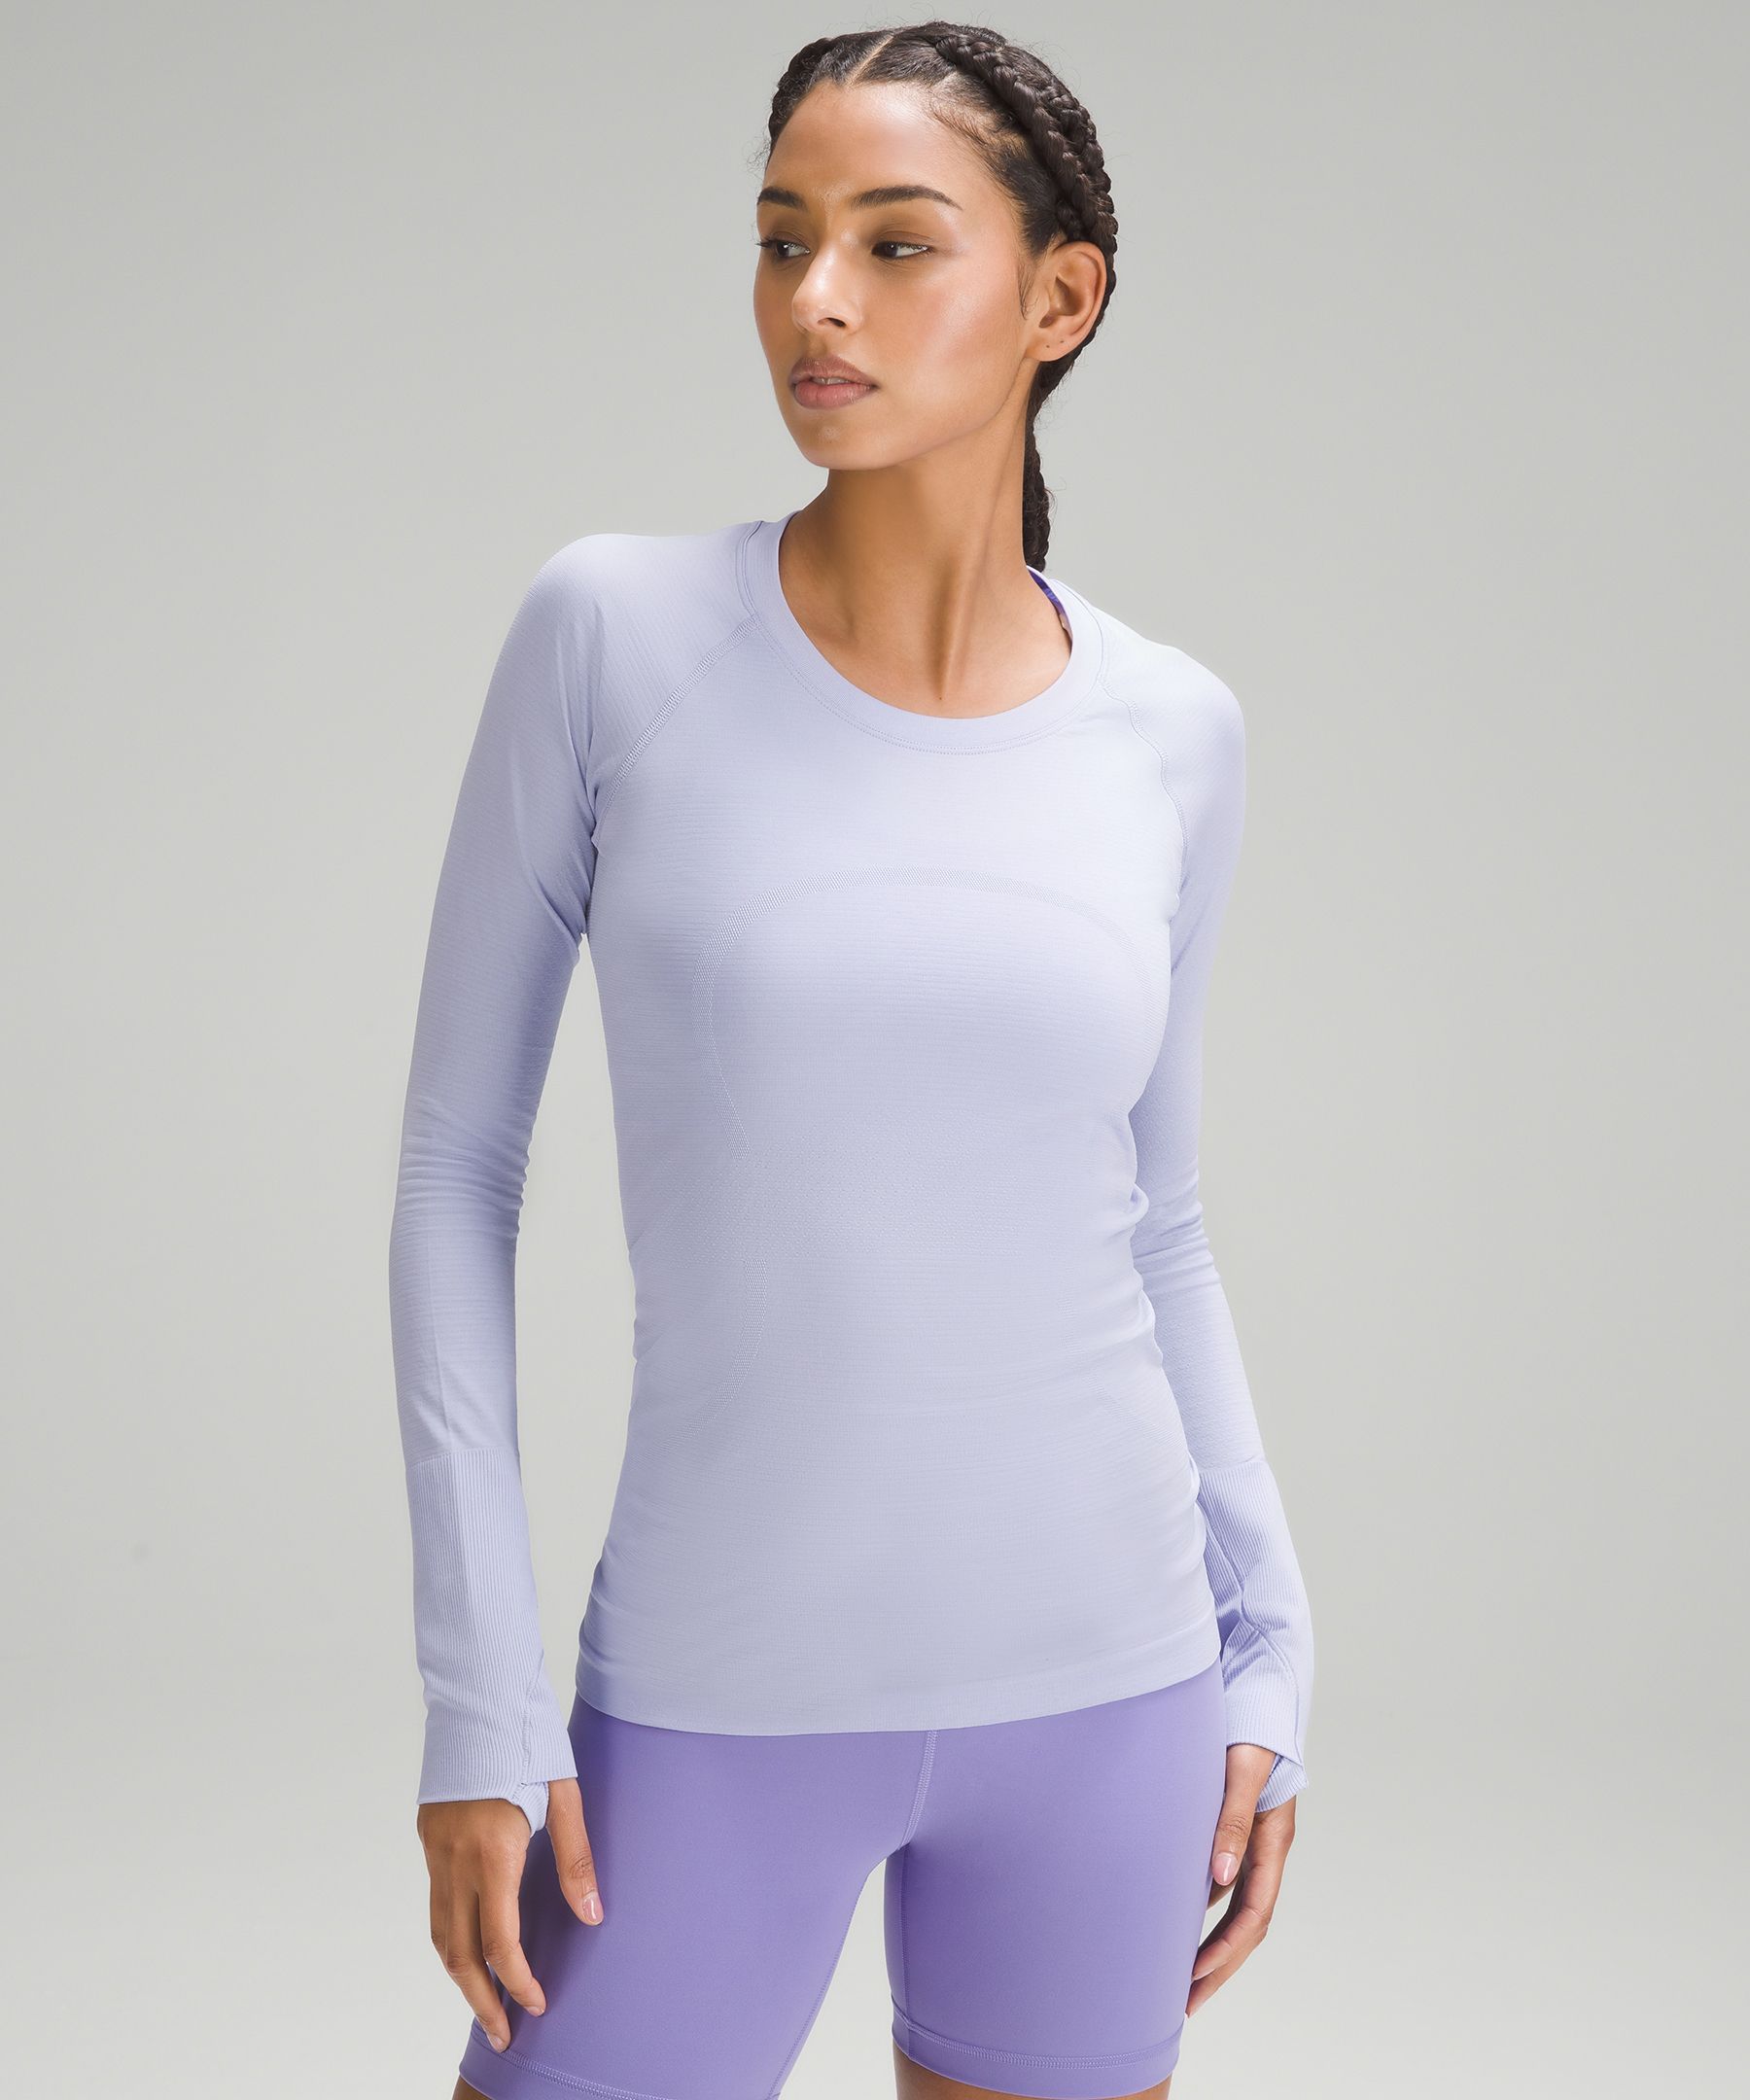 Swiftly Tech Long-Sleeve Shirt 2.0 *Online Only | Women's Long Sleeve ...